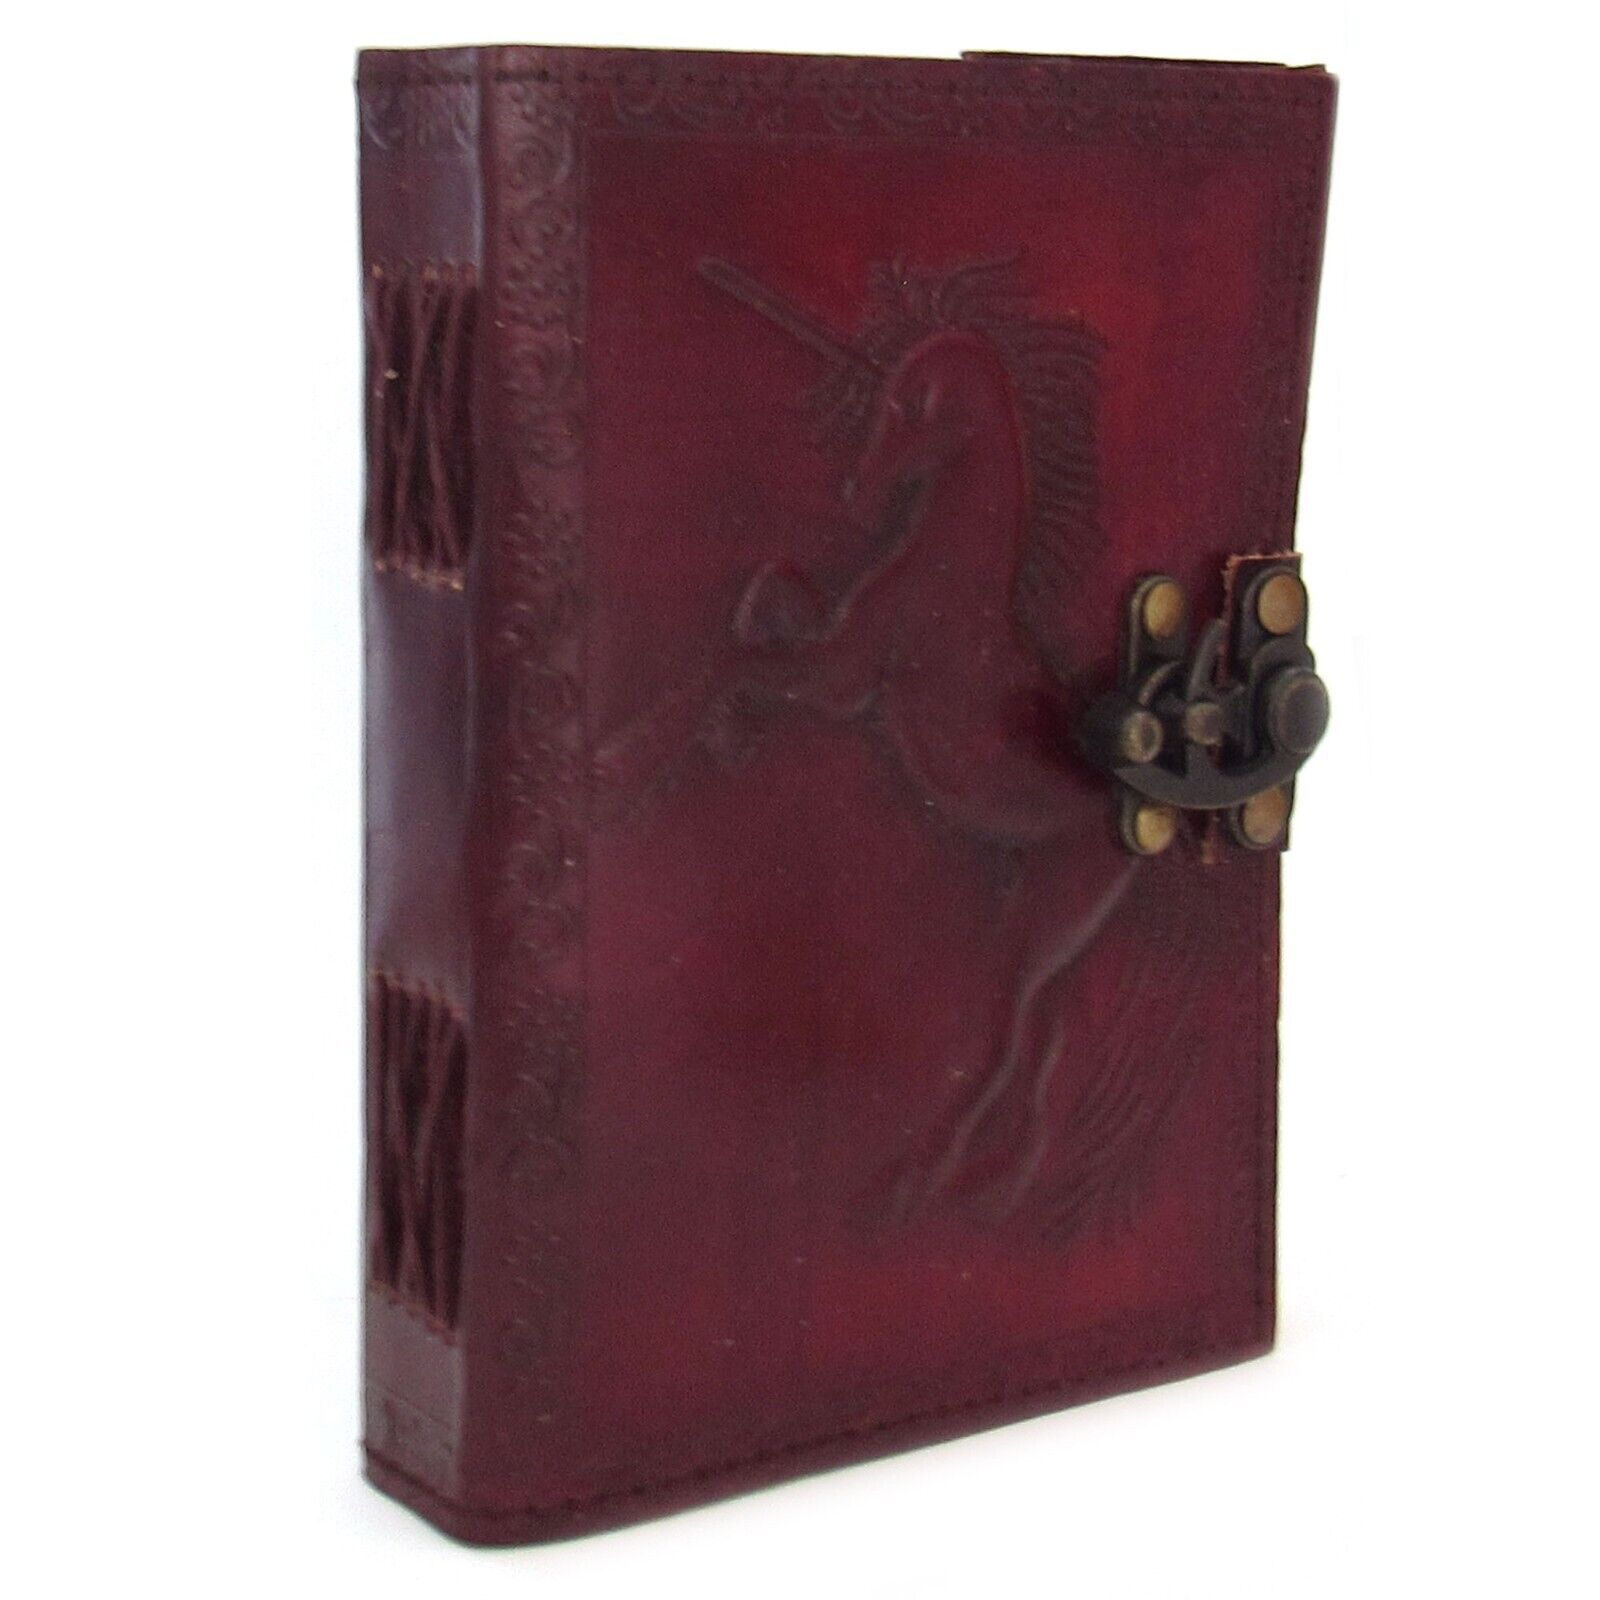 NEW Unicorn Leather Journal 5x7